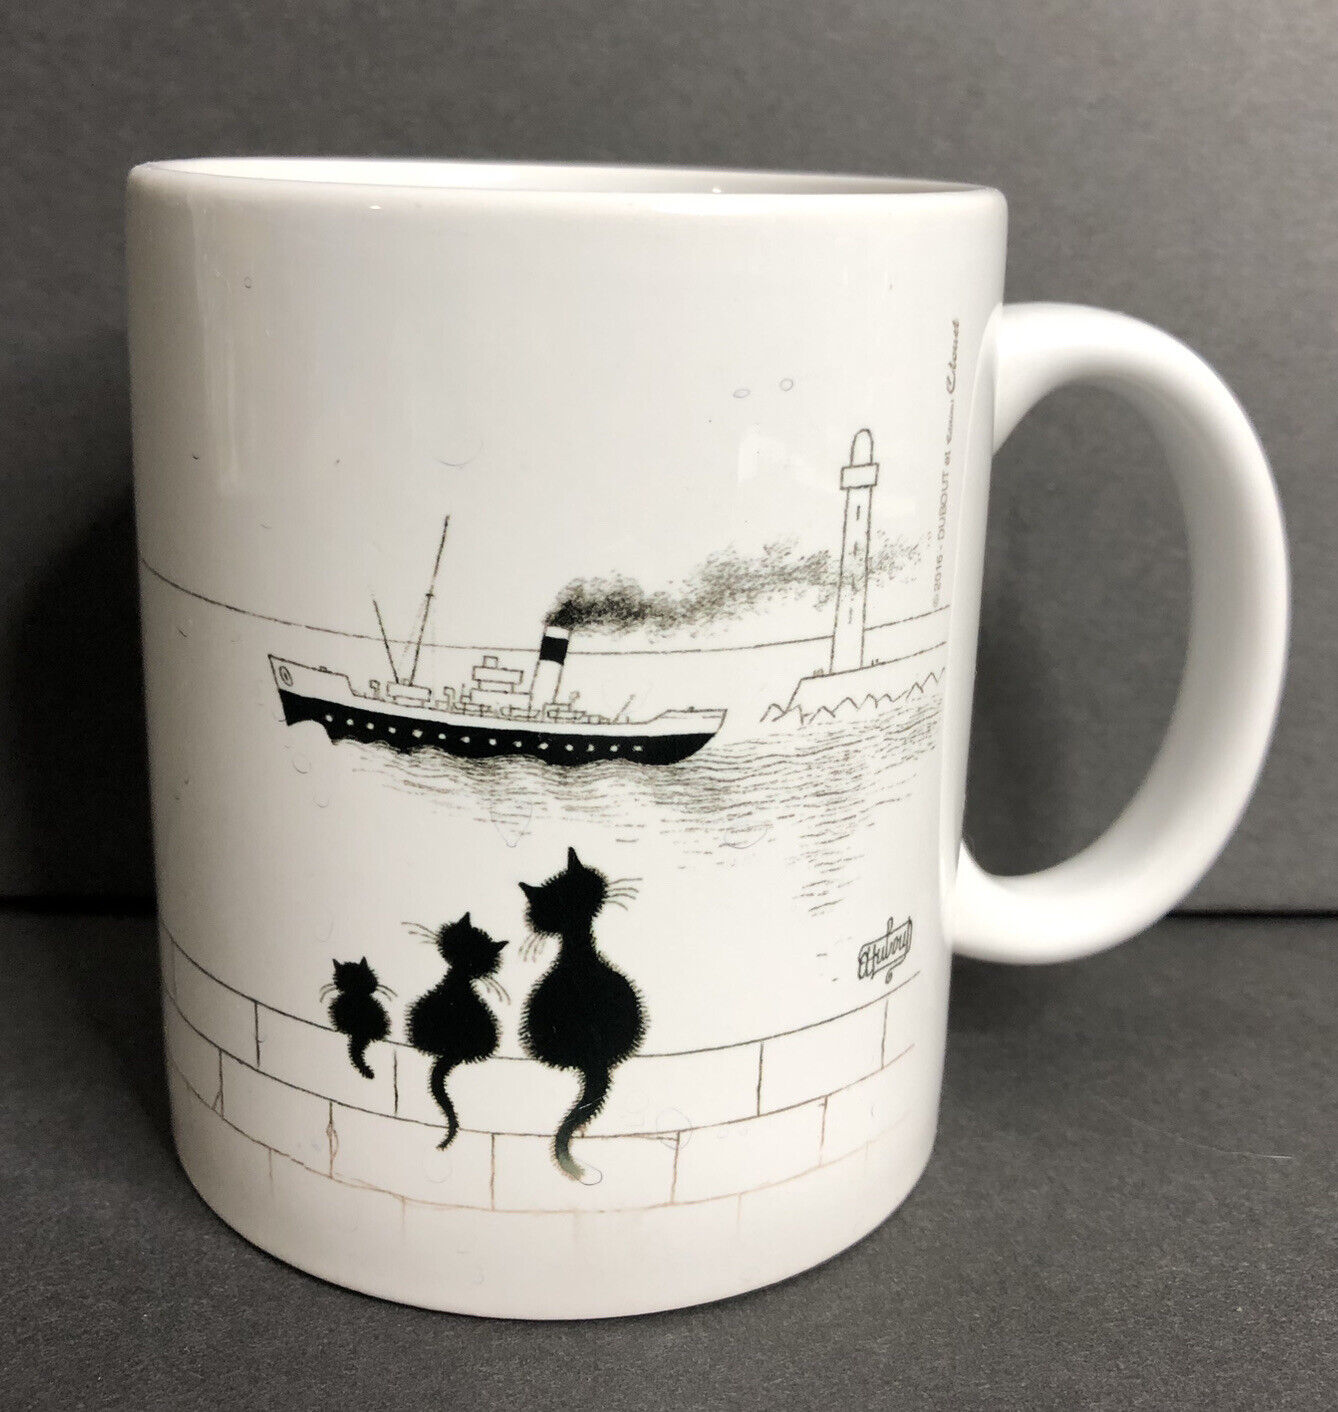 Albert DUBOUT Cat Ceramic Mug Black White 3 Cats on Wall Watching Steamship 2016